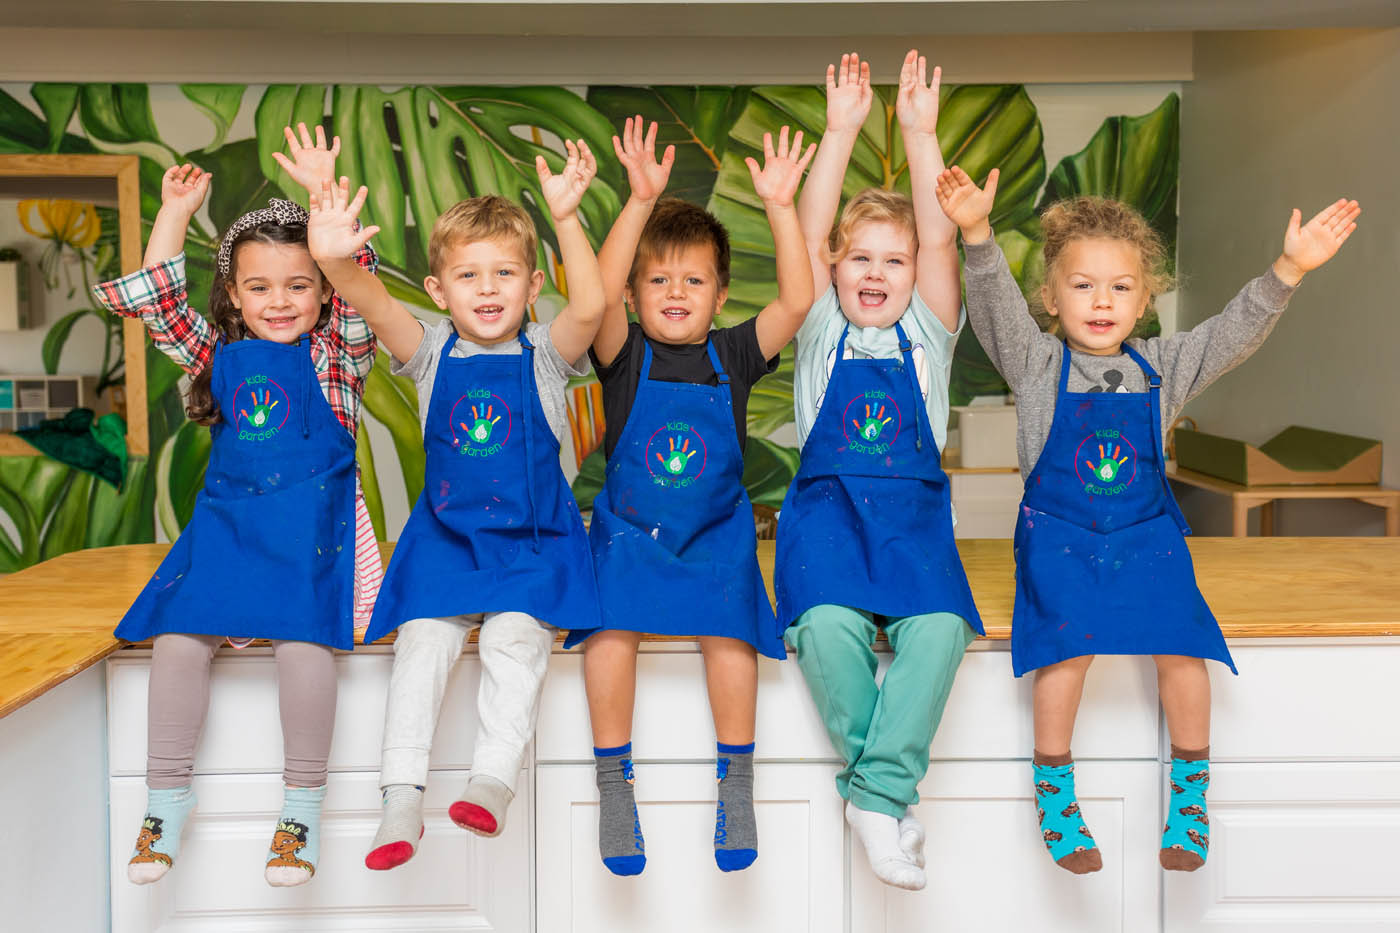 Kids in blue aprons at Kids Garden Houston learning center.